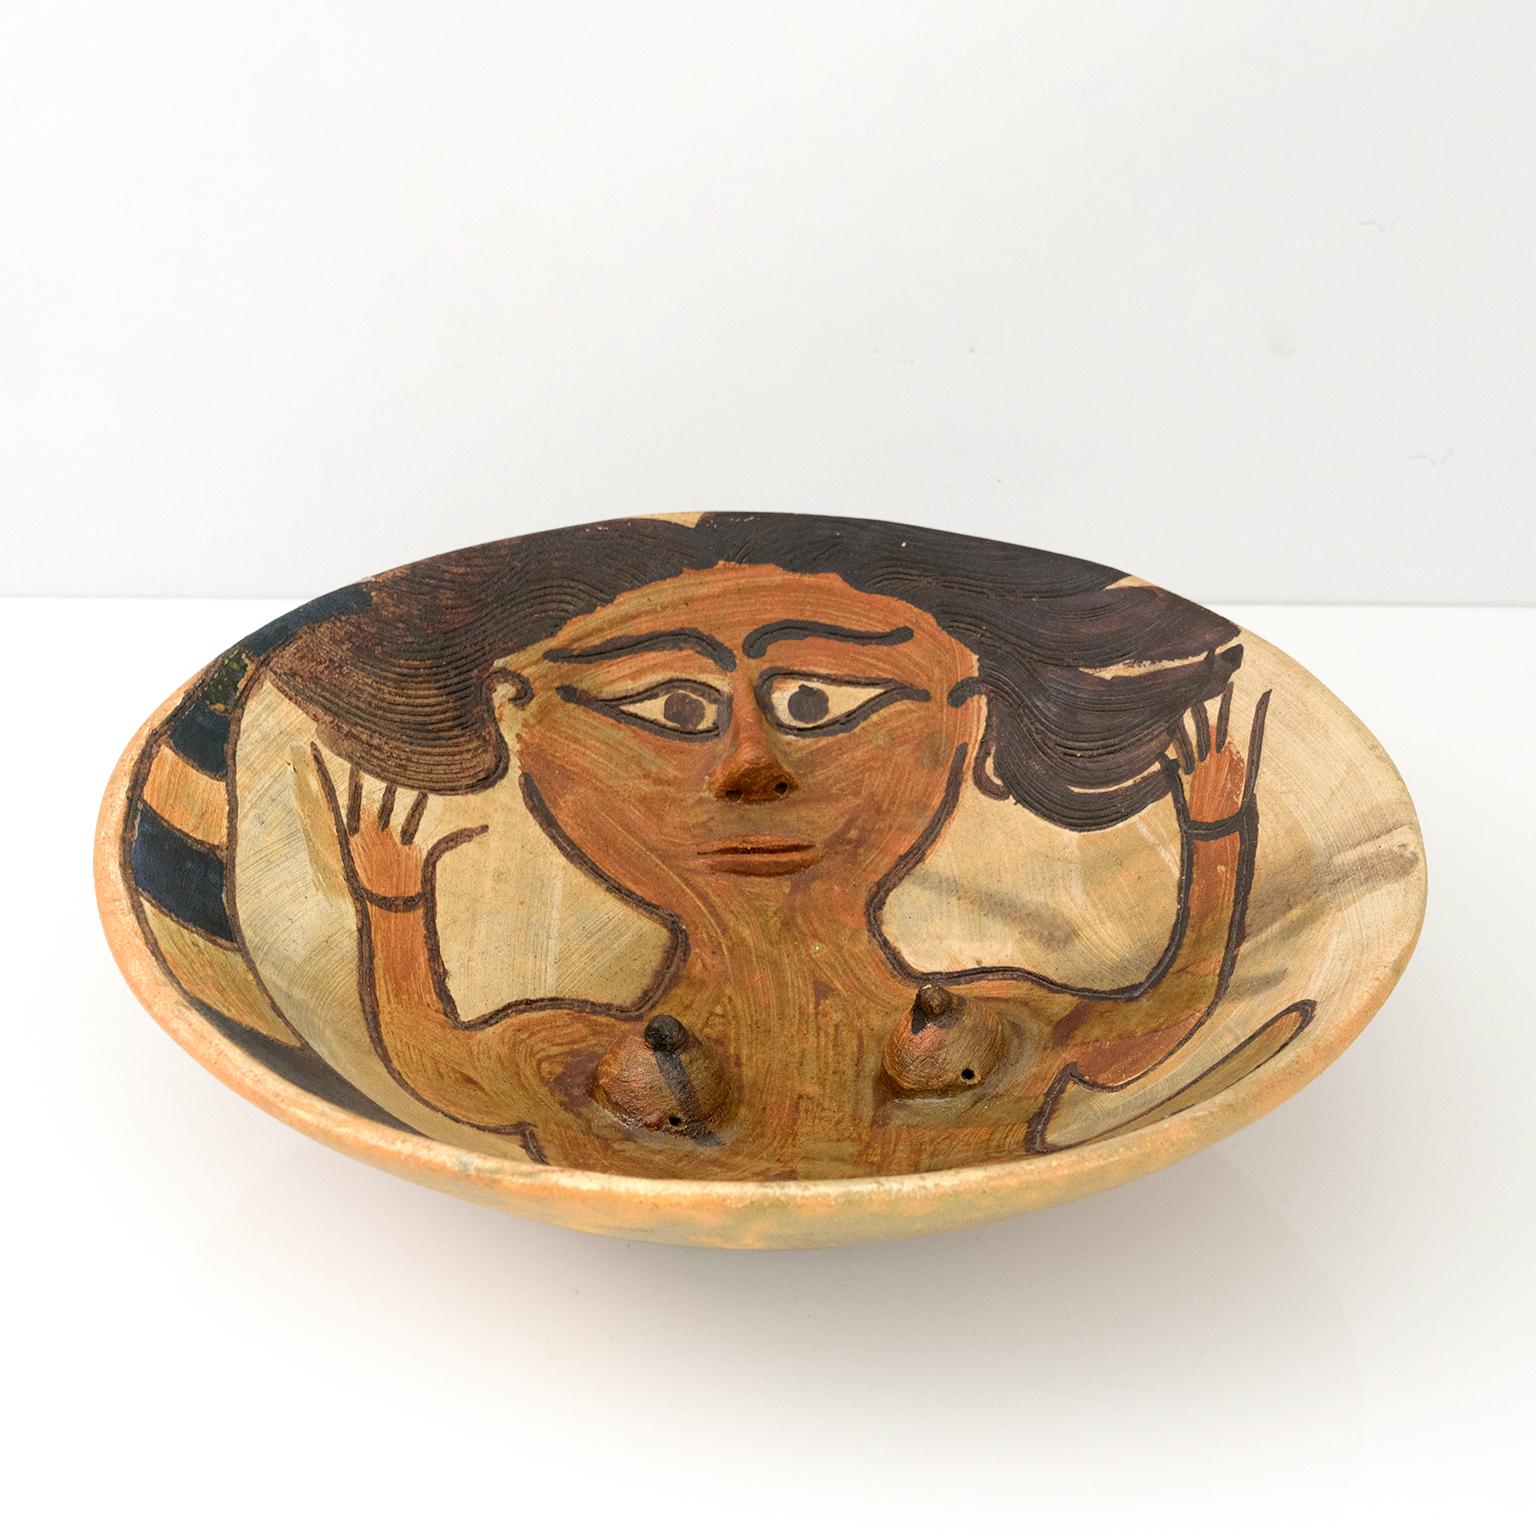 Ceramic Dolores Porras, Mermaid Bowls, Santa Maria Atzompa, Oaxaca, Mexico, '2 Pieces'